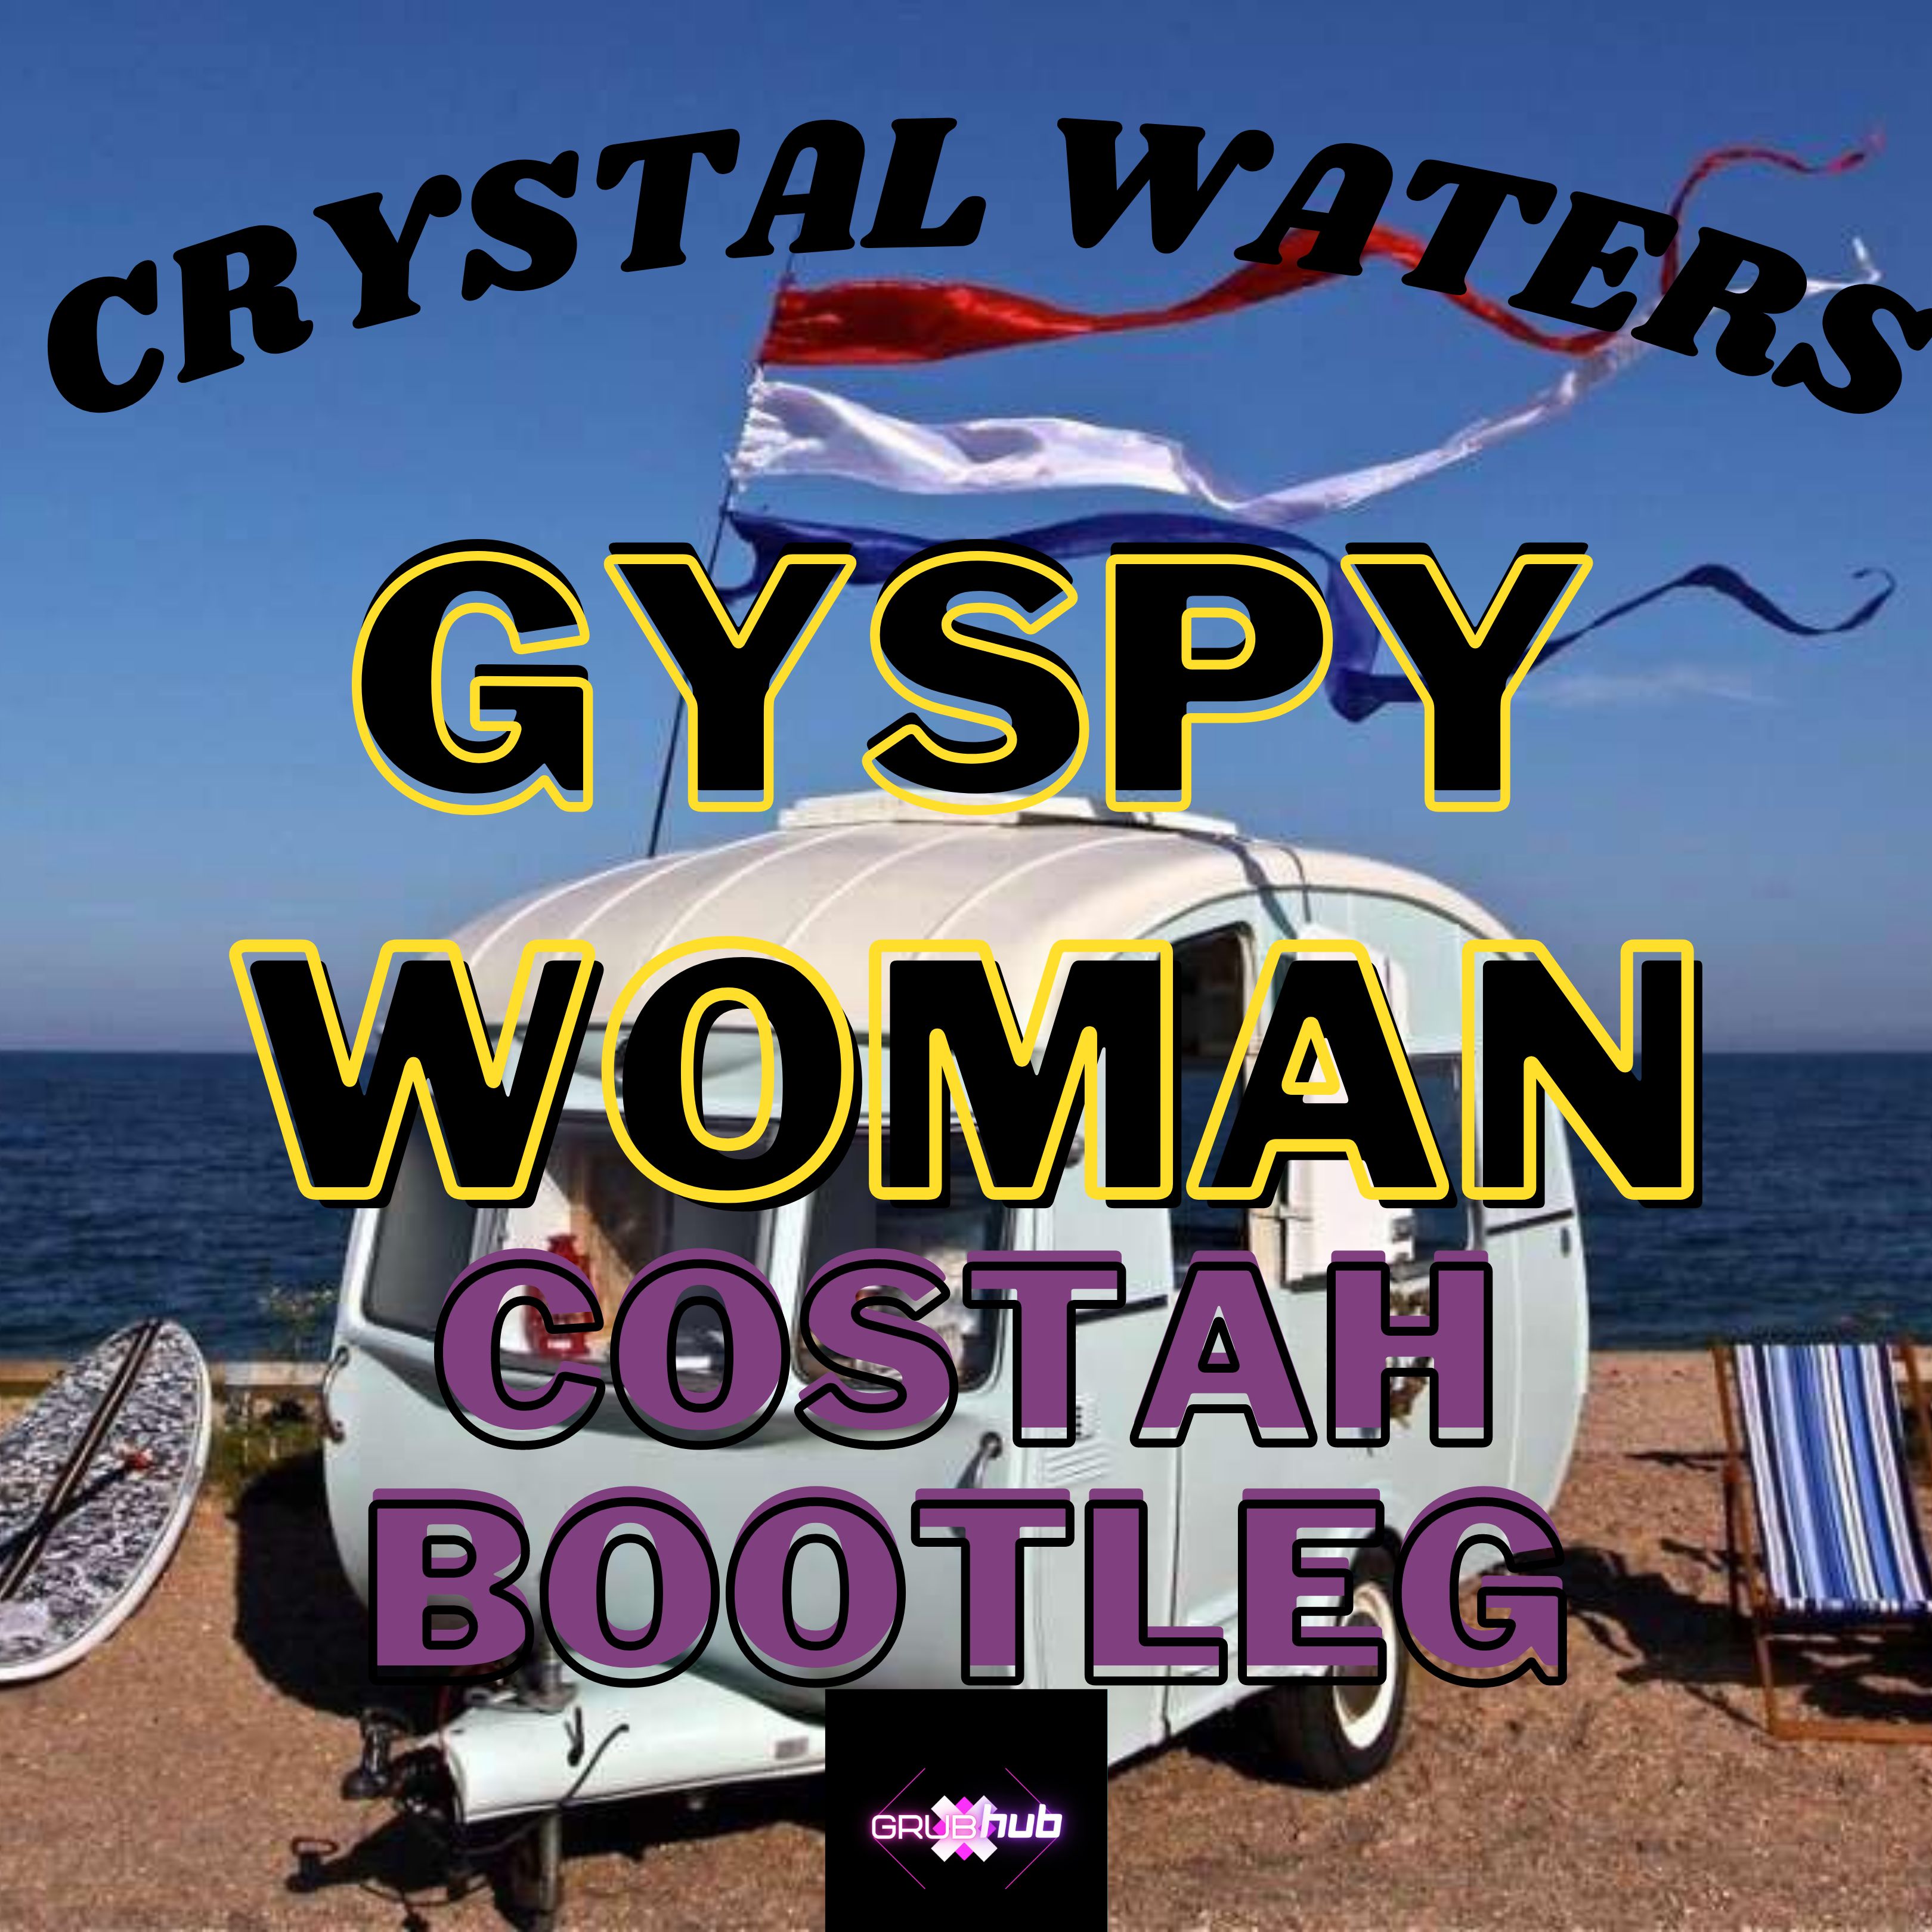 Descarregar Crystal Waters - Gypsy Woman (Costah Bootleg) FREE DOWNLOAD